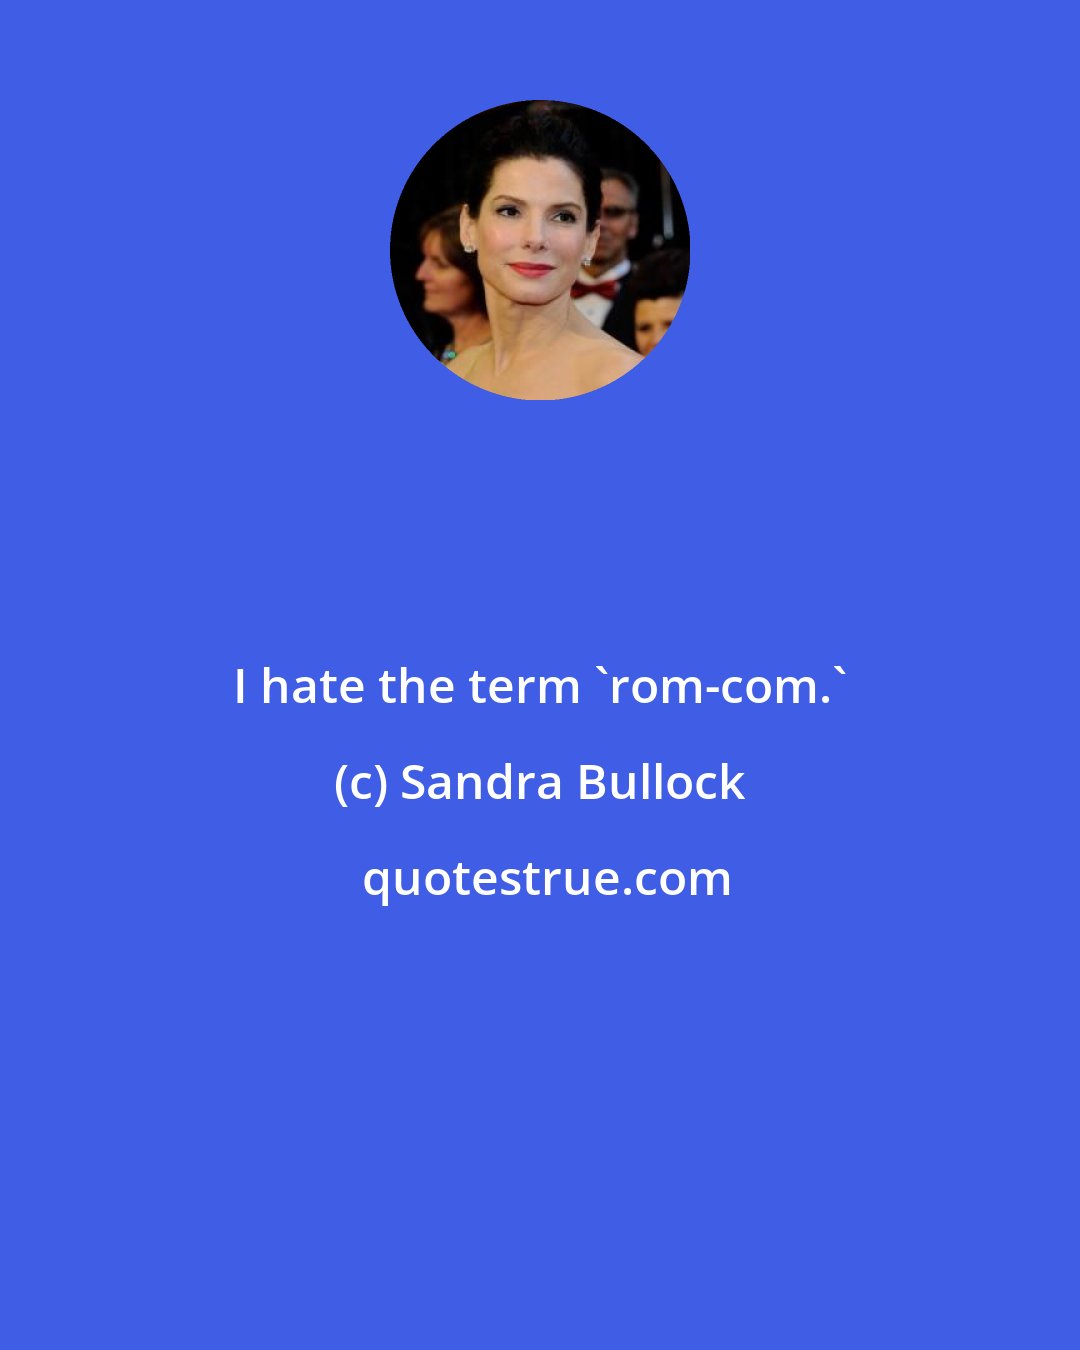 Sandra Bullock: I hate the term 'rom-com.'